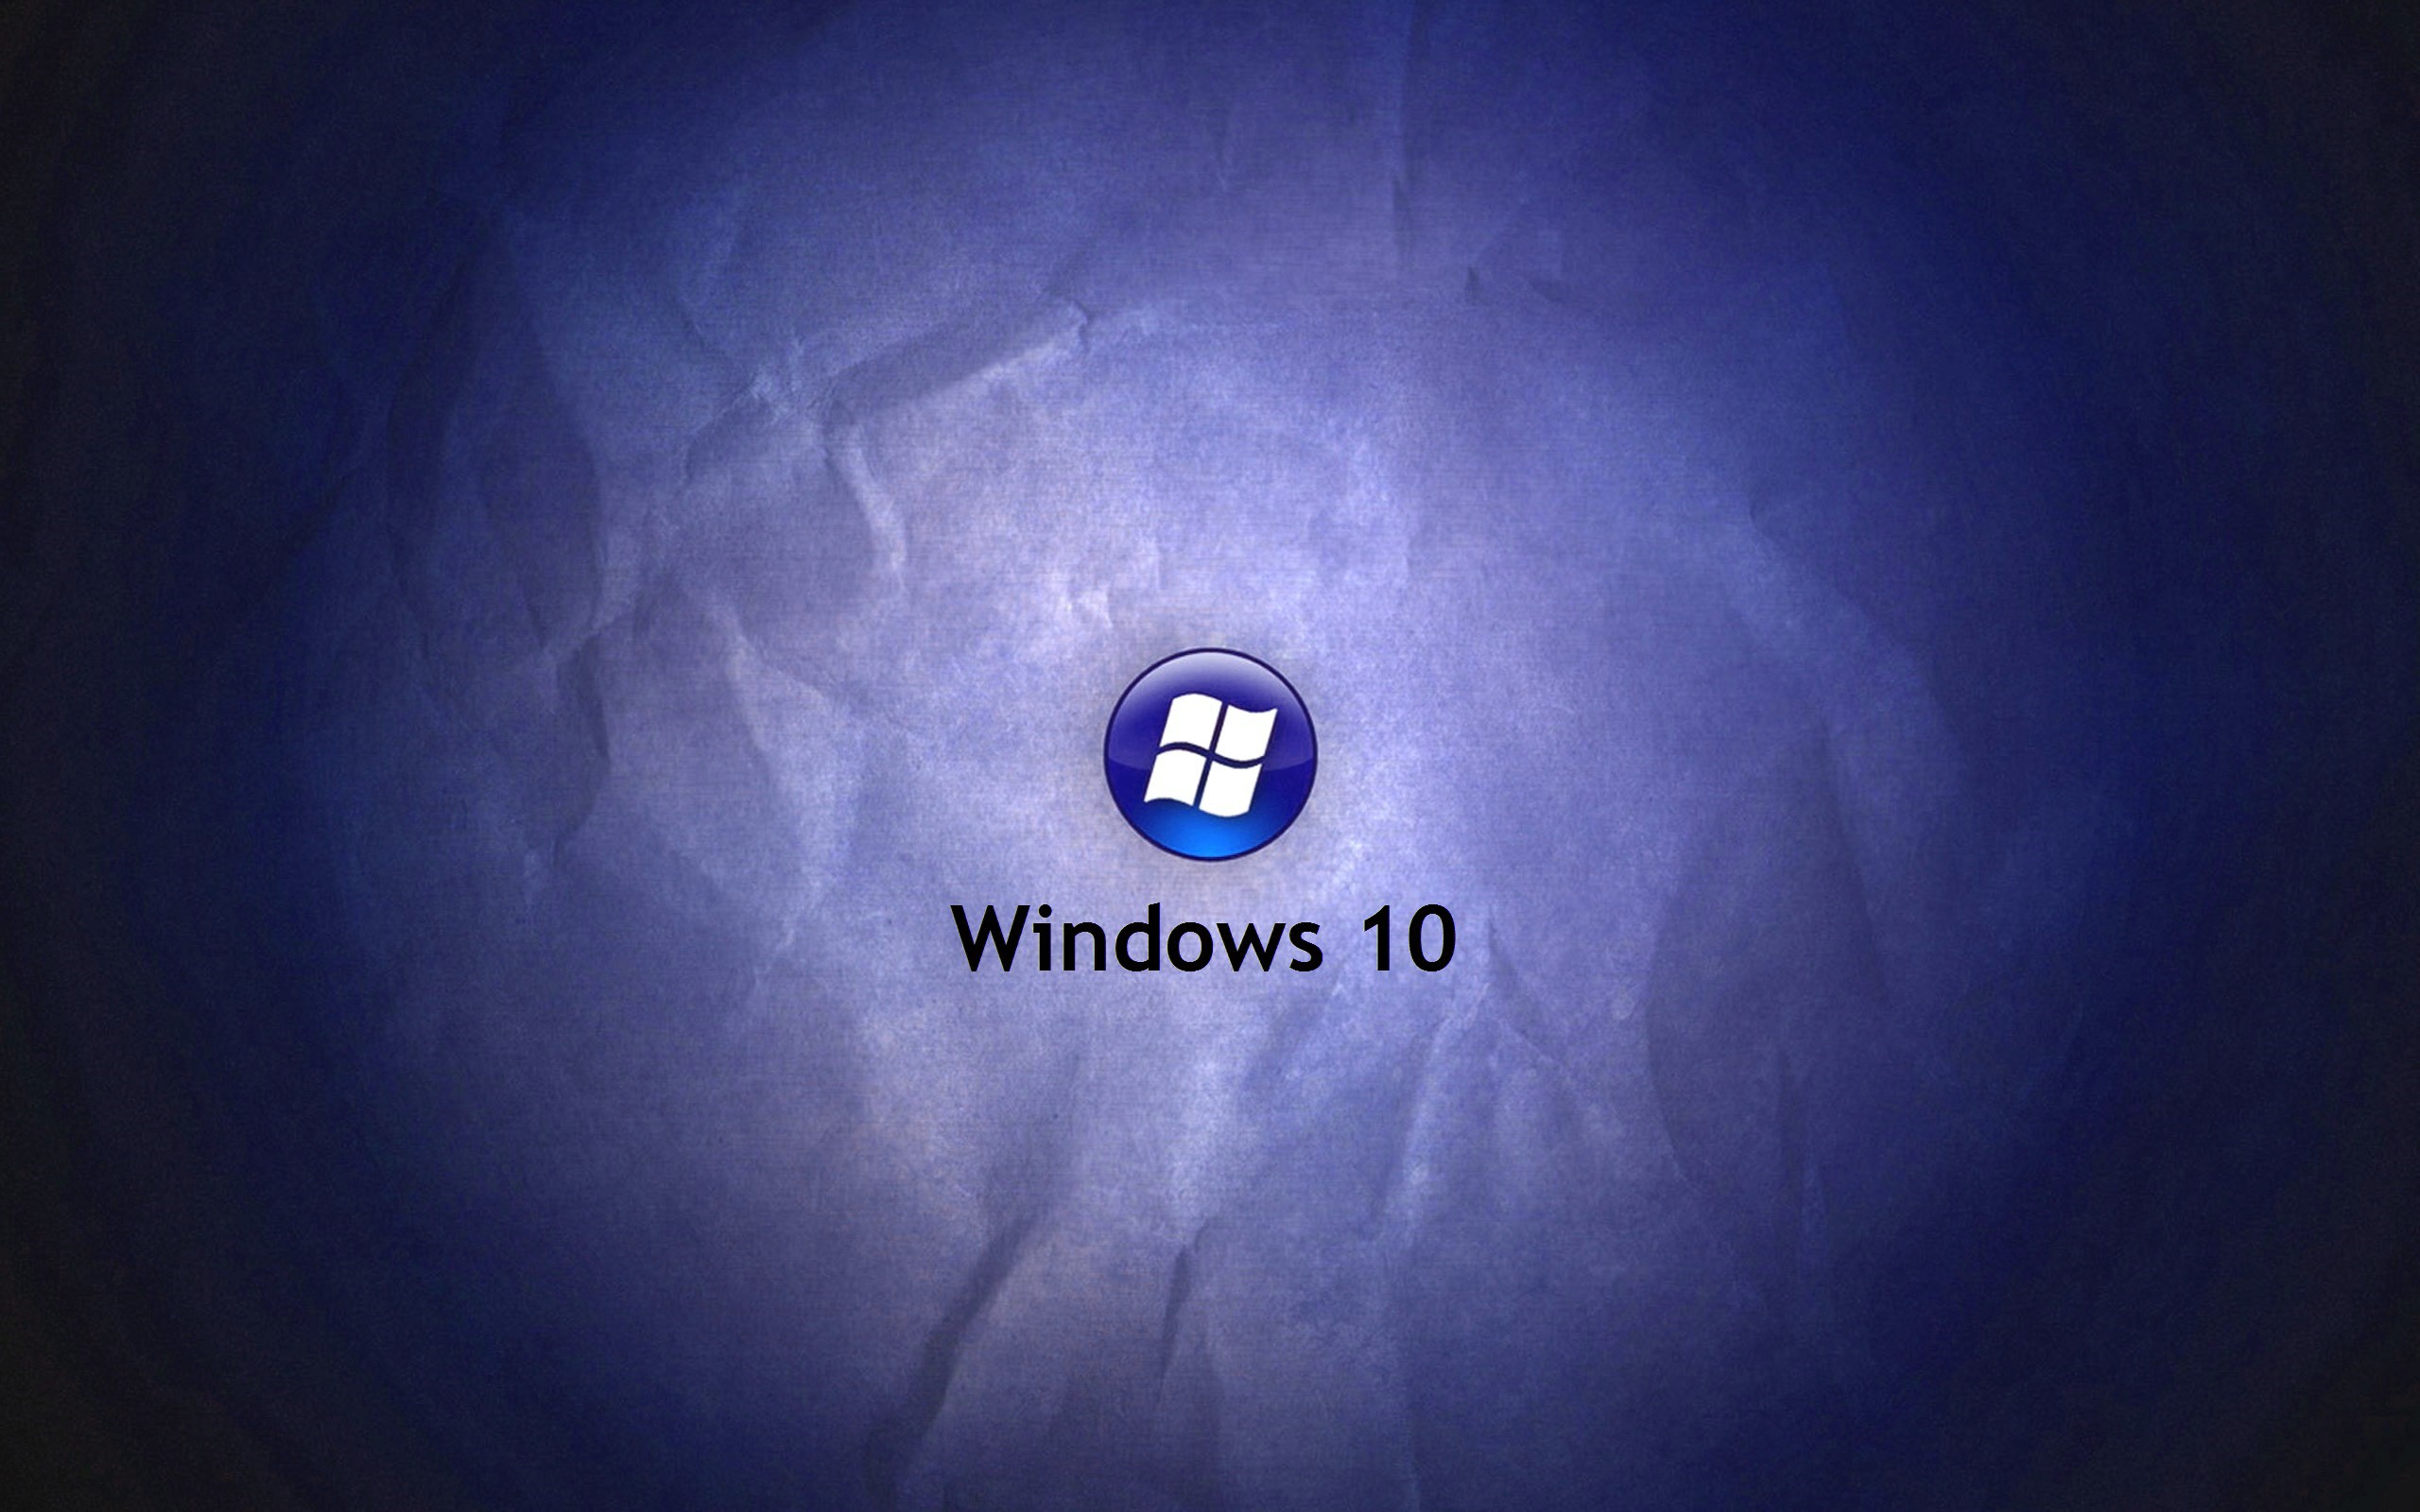 desktop wallpaper hd for windows 10,logo,blue,text,operating system,atmosphere